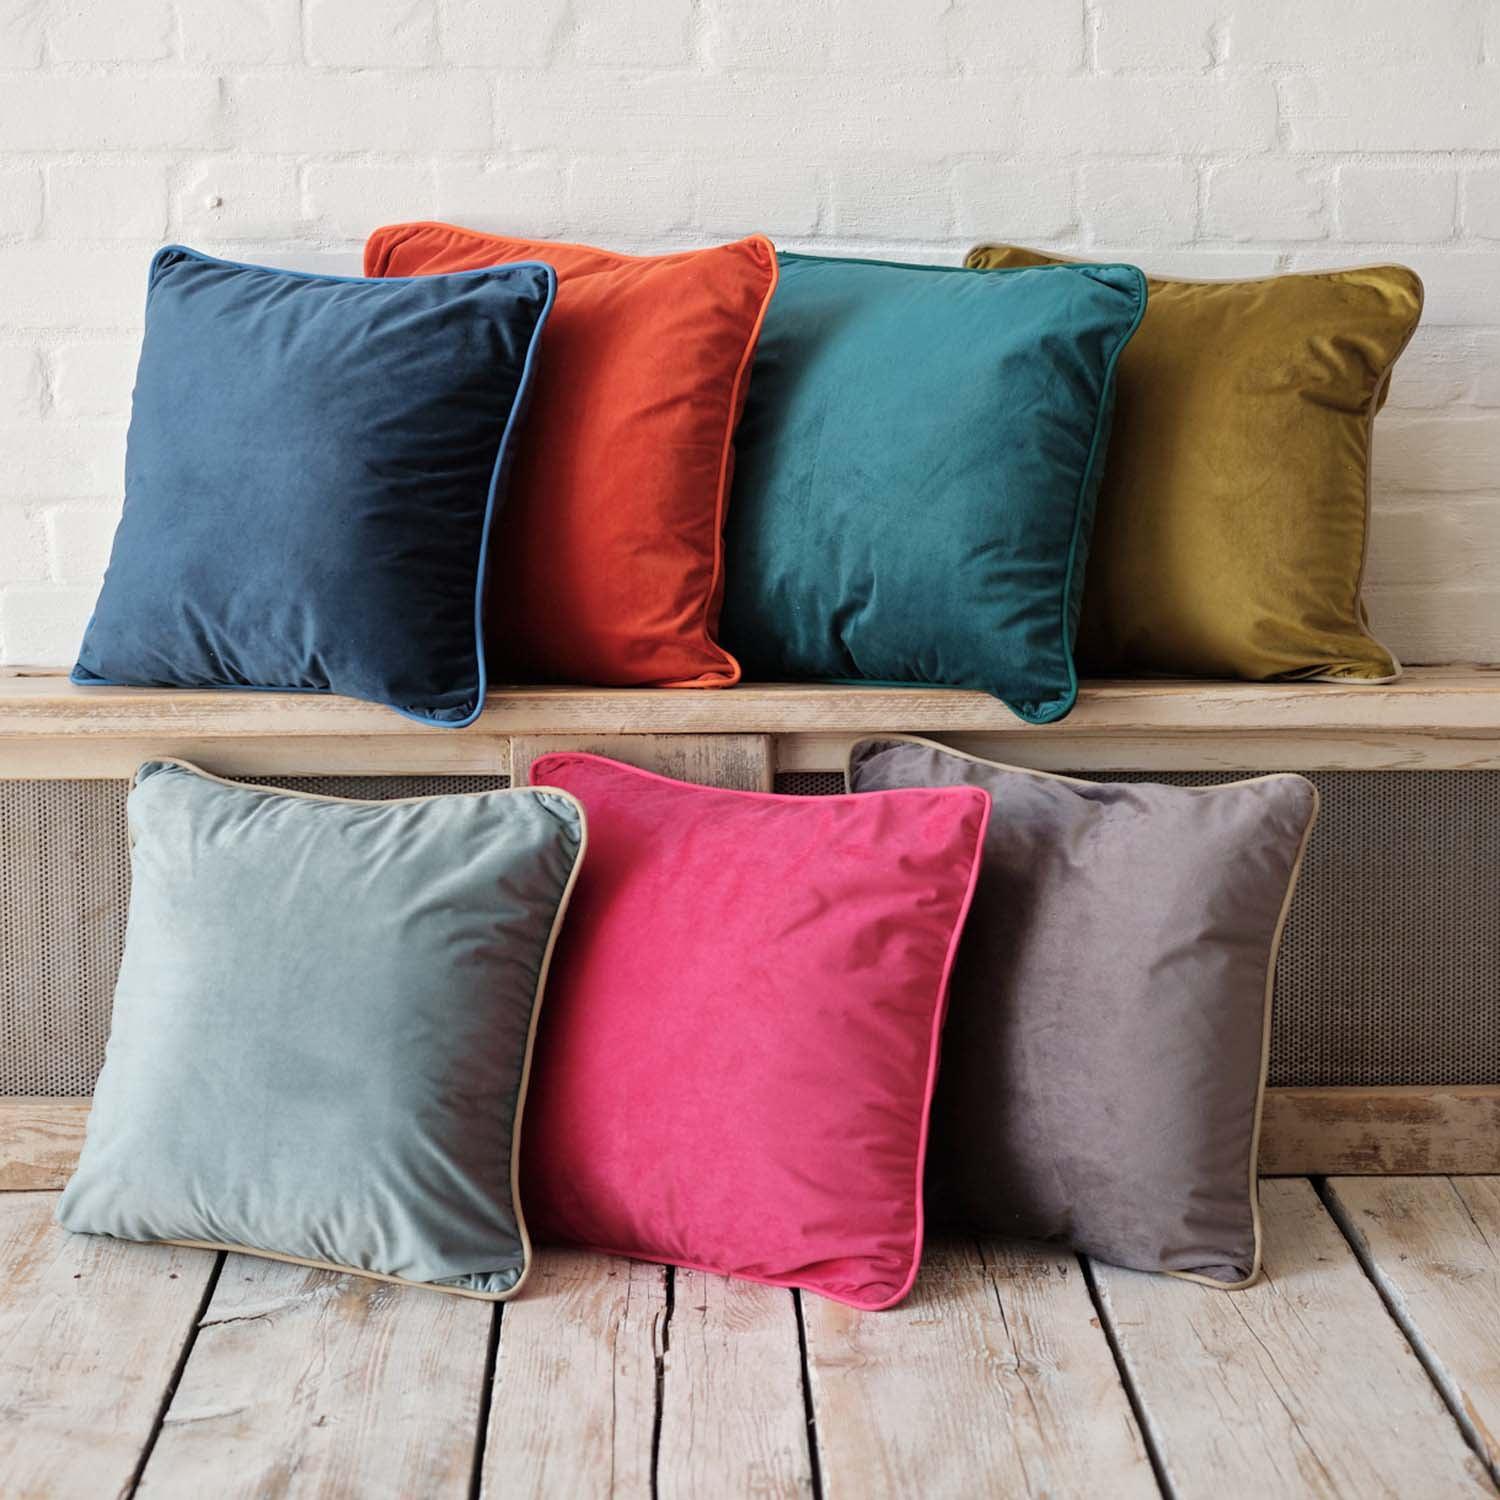 Velvet Velour Cushion Green Piped - Art Print Cushion - Handmade Cushions UK - WeLoveCushions